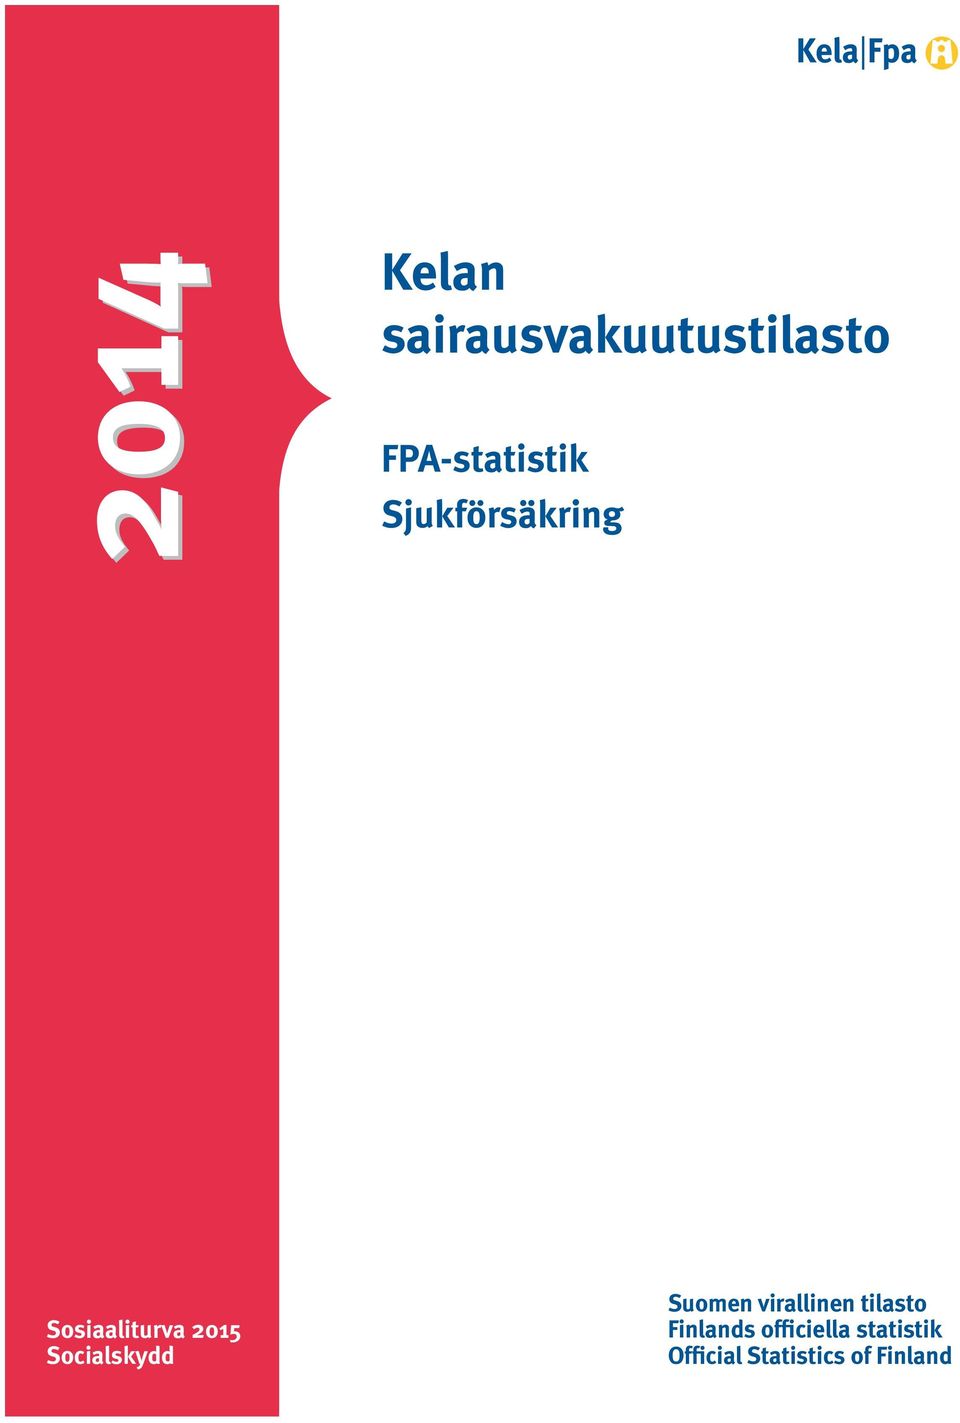 2015 Socialskydd Suomen virallinen tilasto